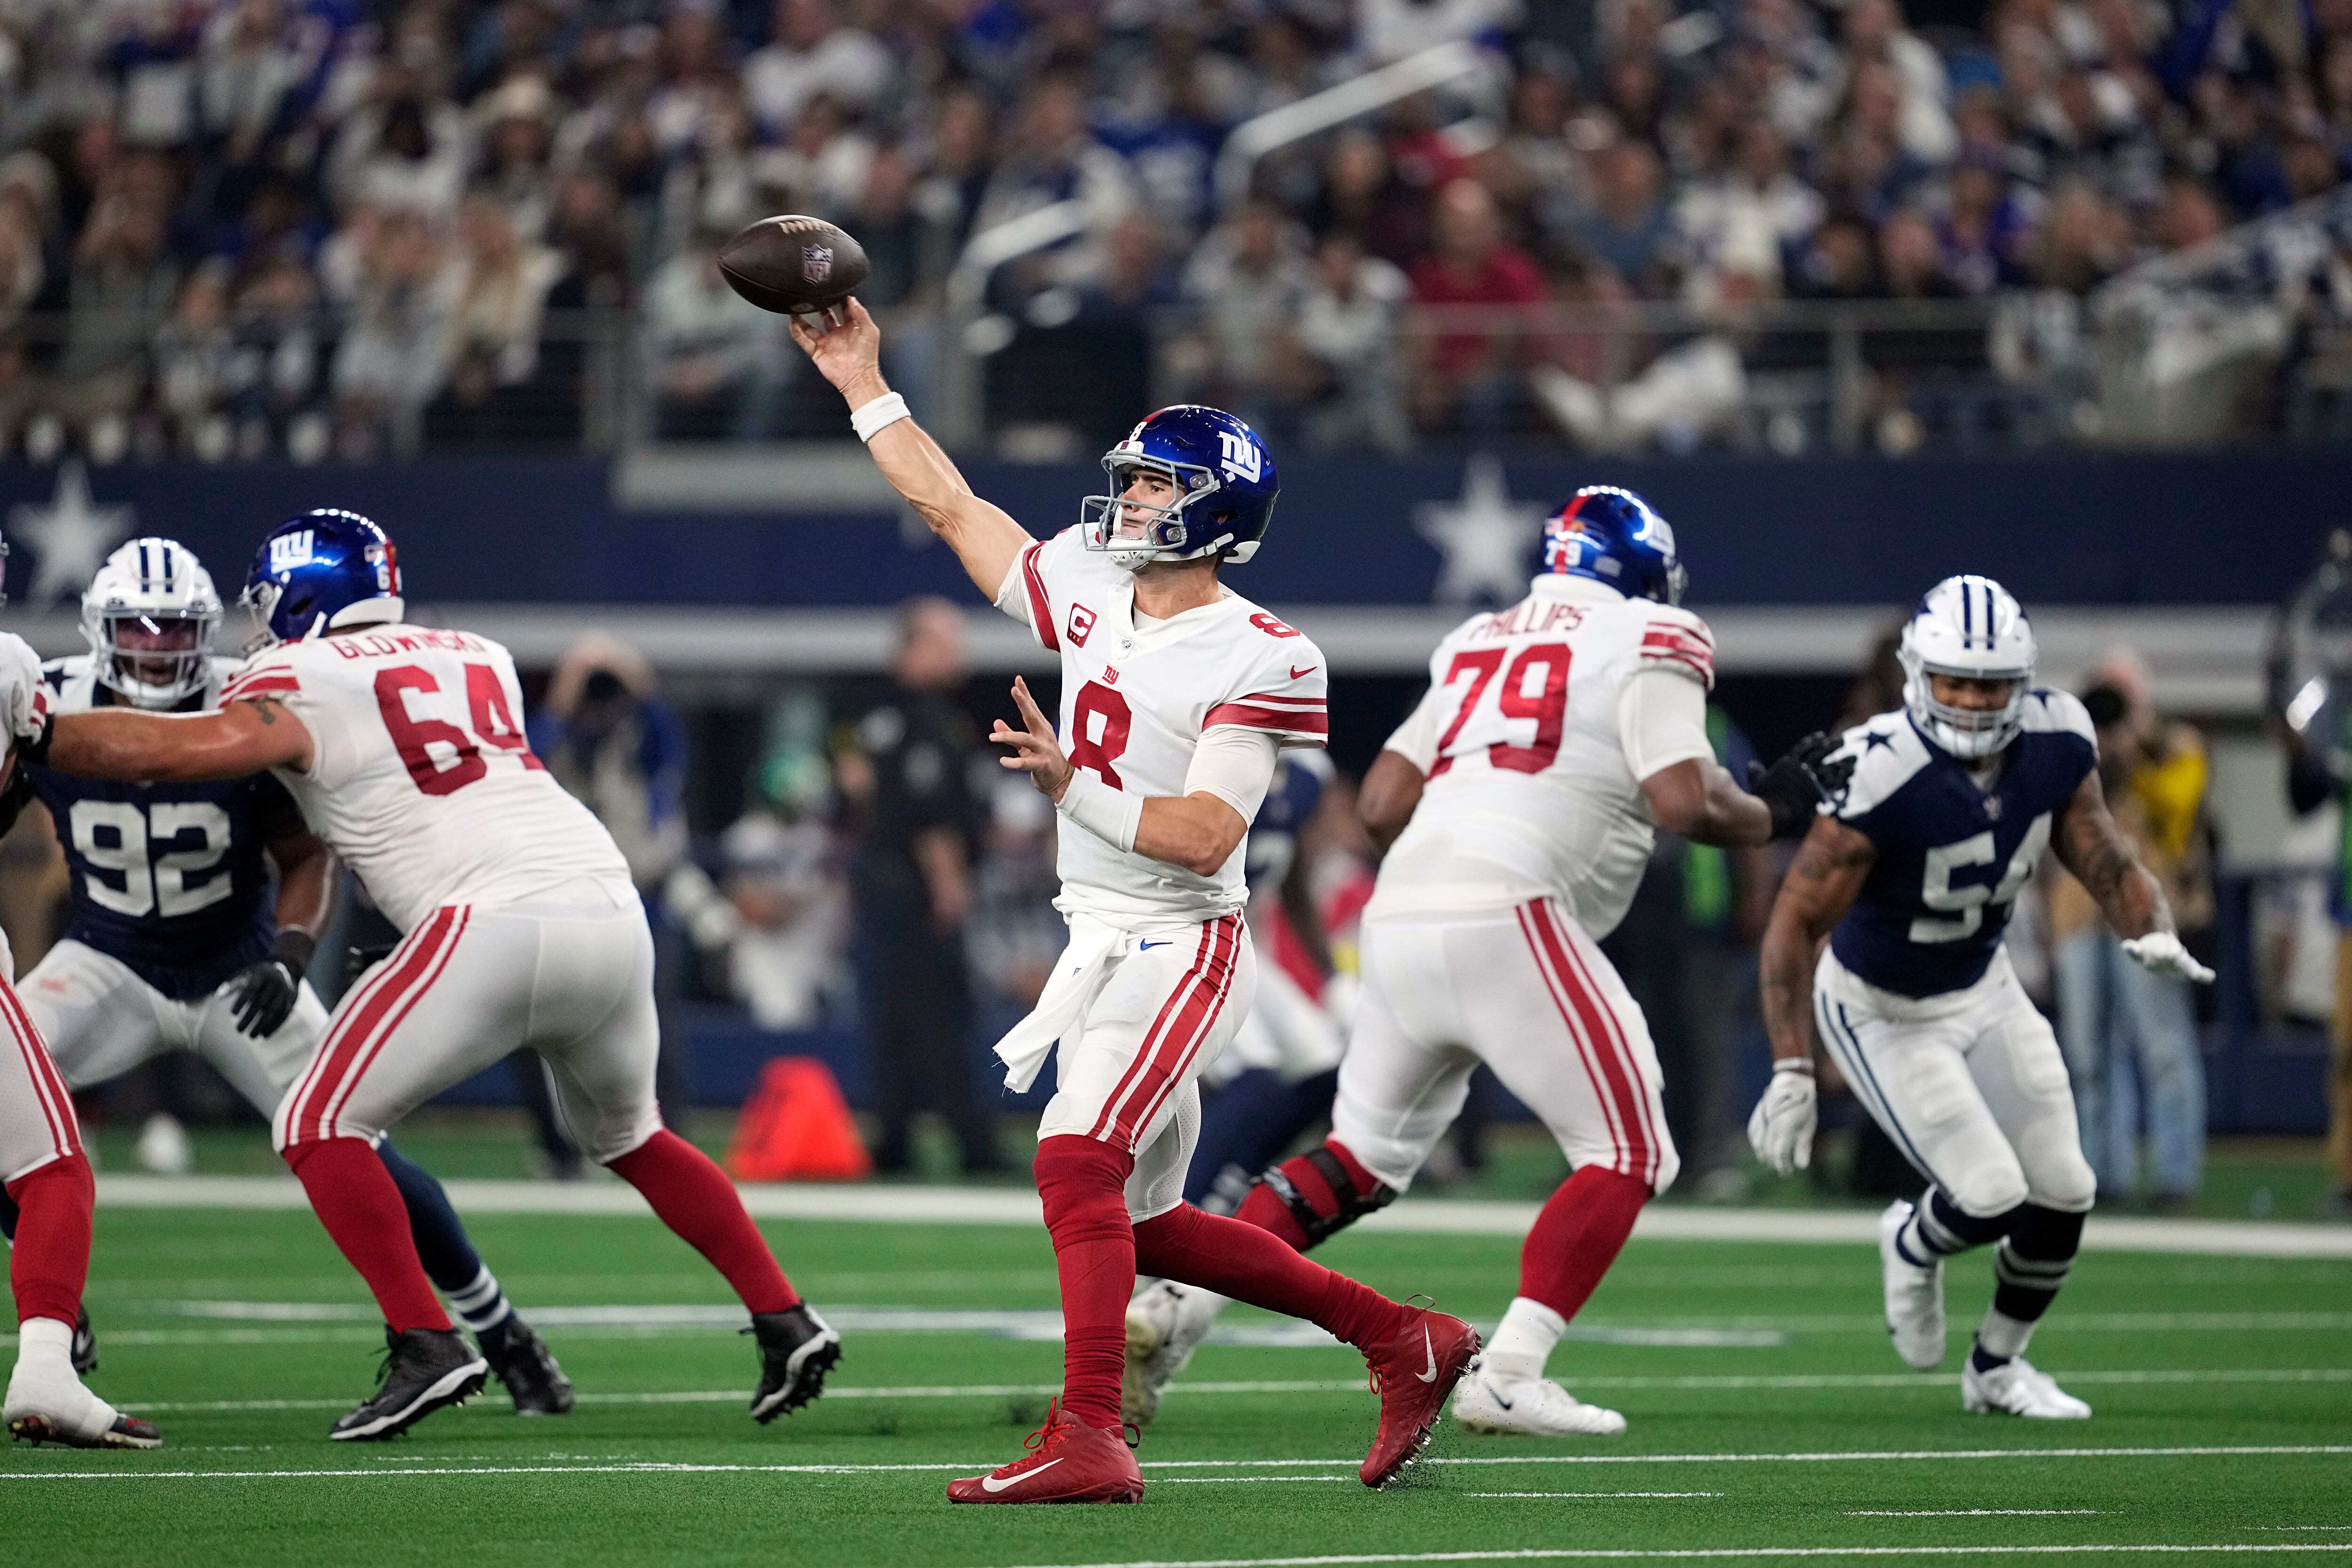 Giants-Cowboys final score: Giants lose to Dallas, 28-20 - Big Blue View